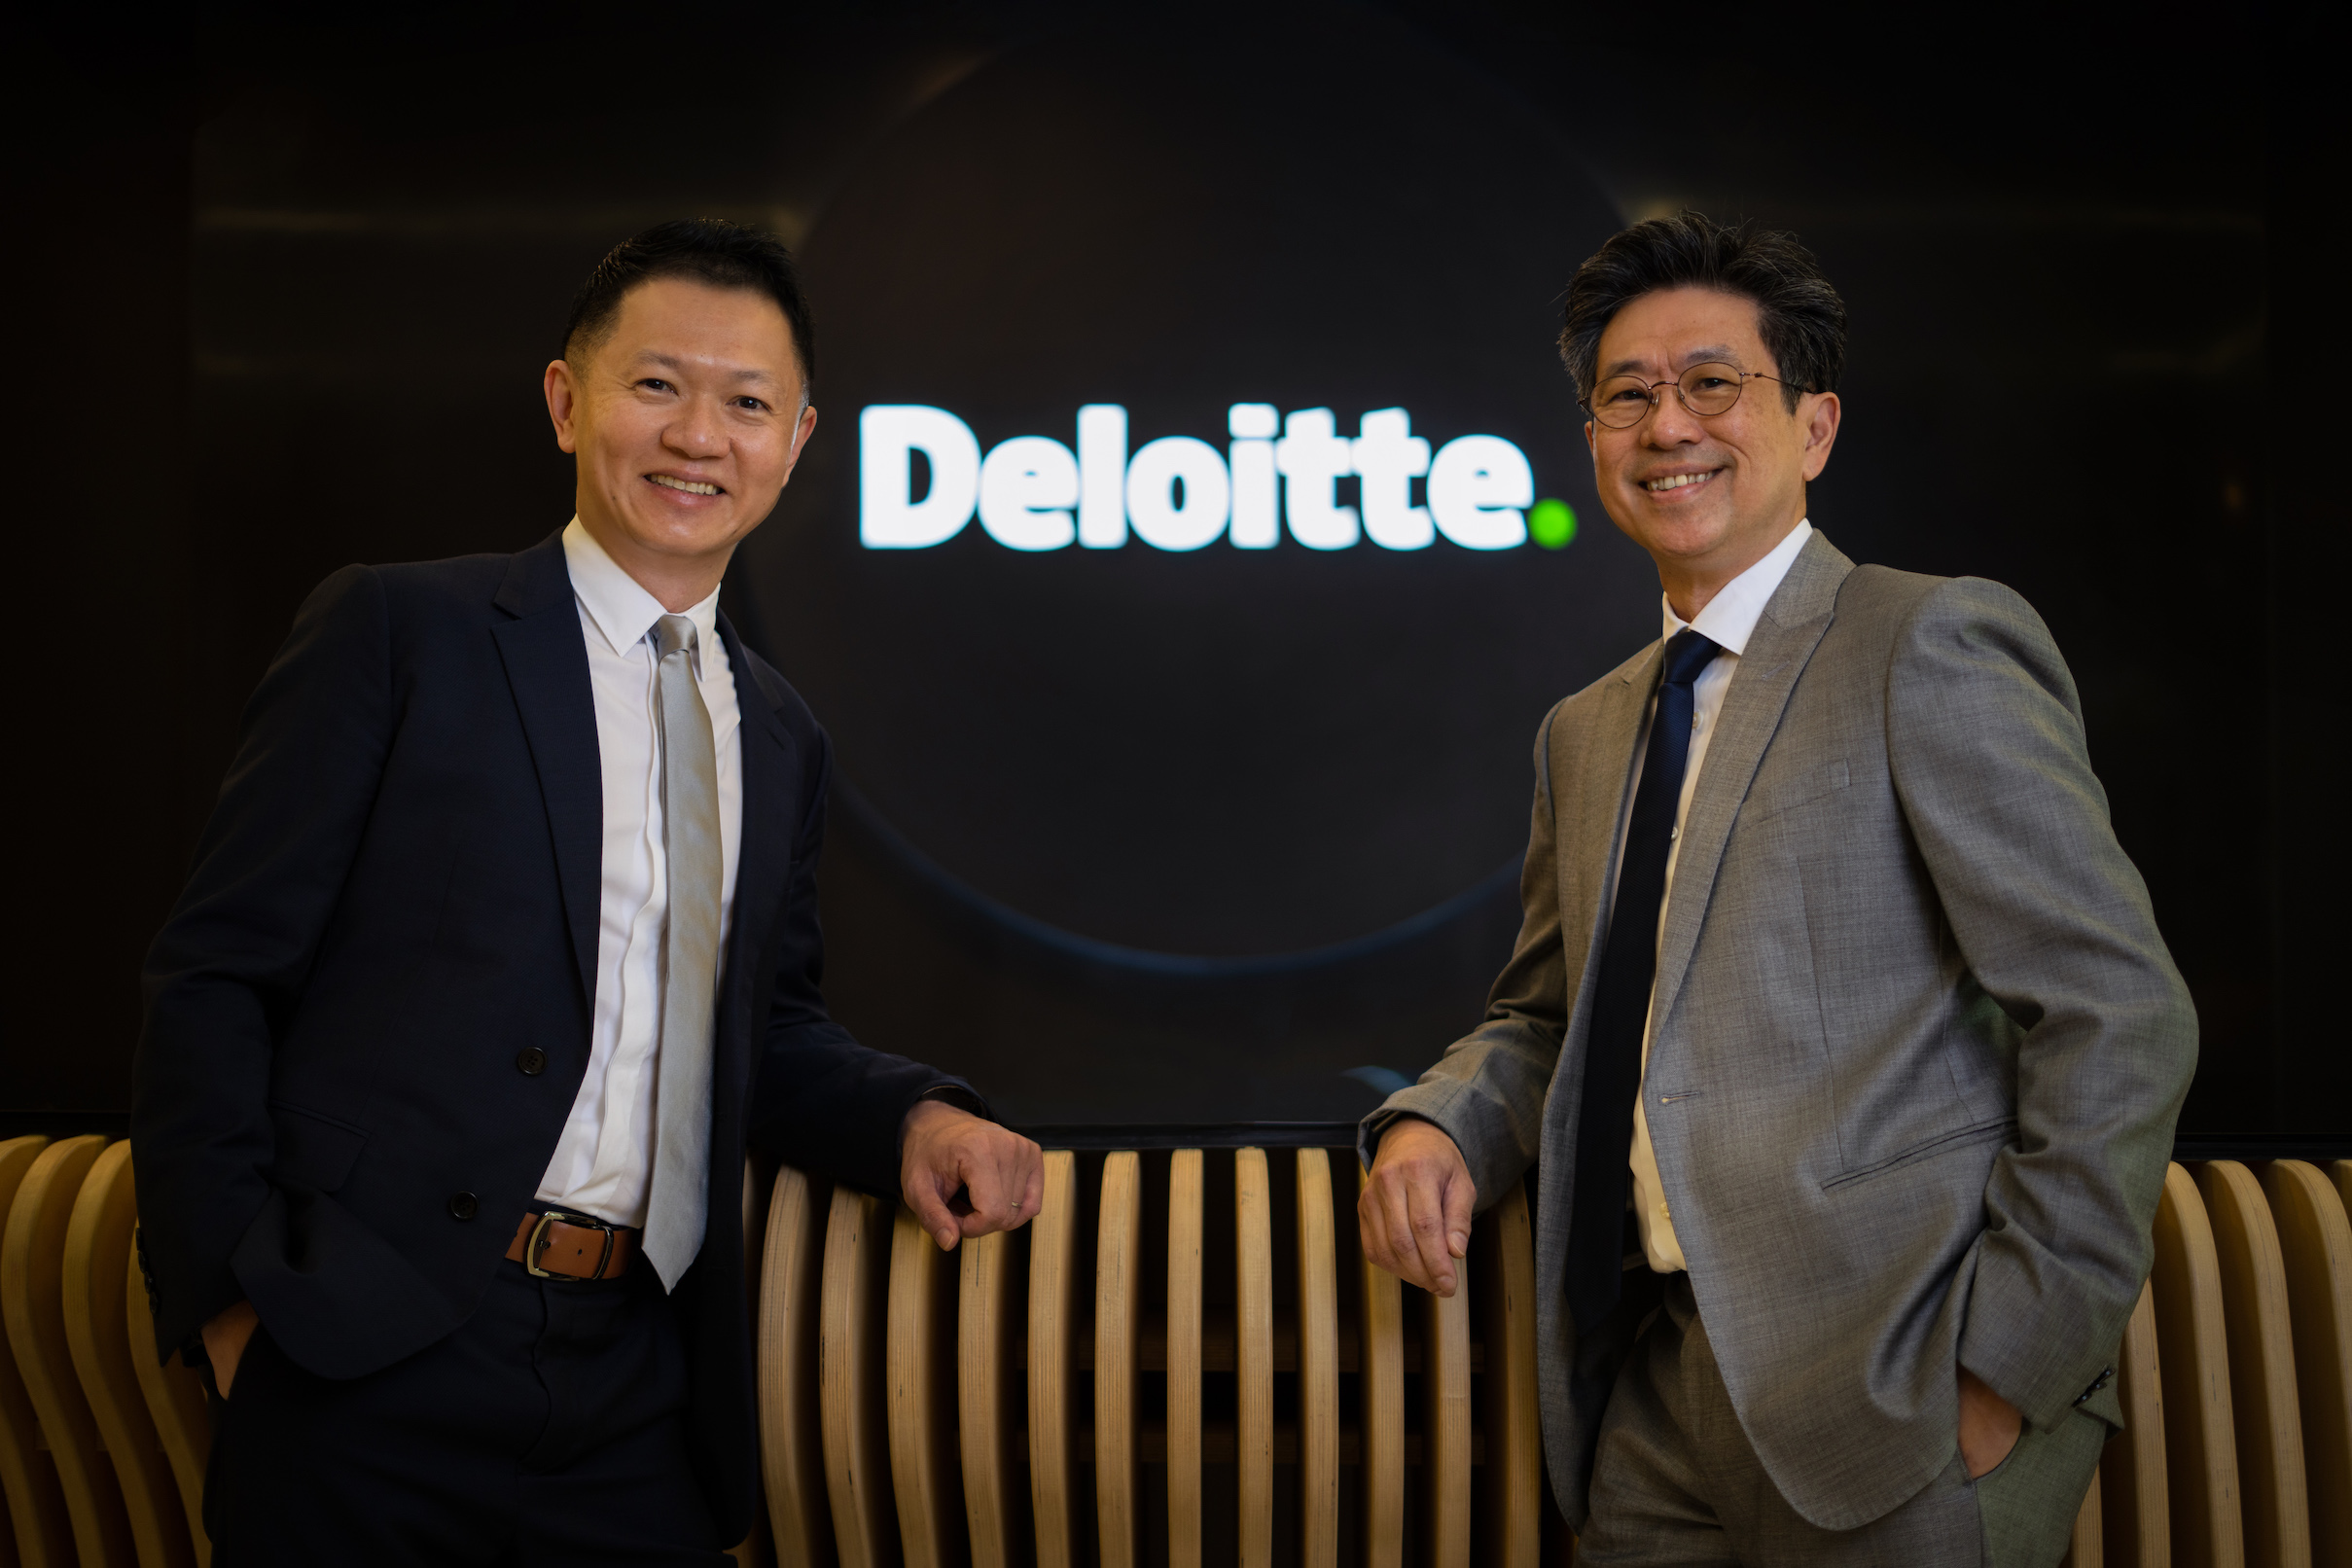 Deloitte เอเชียตะวันออกเฉียงใต้ ประกาศแต่งตั้งประธานเจ้าหน้าที่บริหารคนใหม่ พร้อมนำดีลอยท์เติบโตยิ่งใหญ่ในภูมิภาค